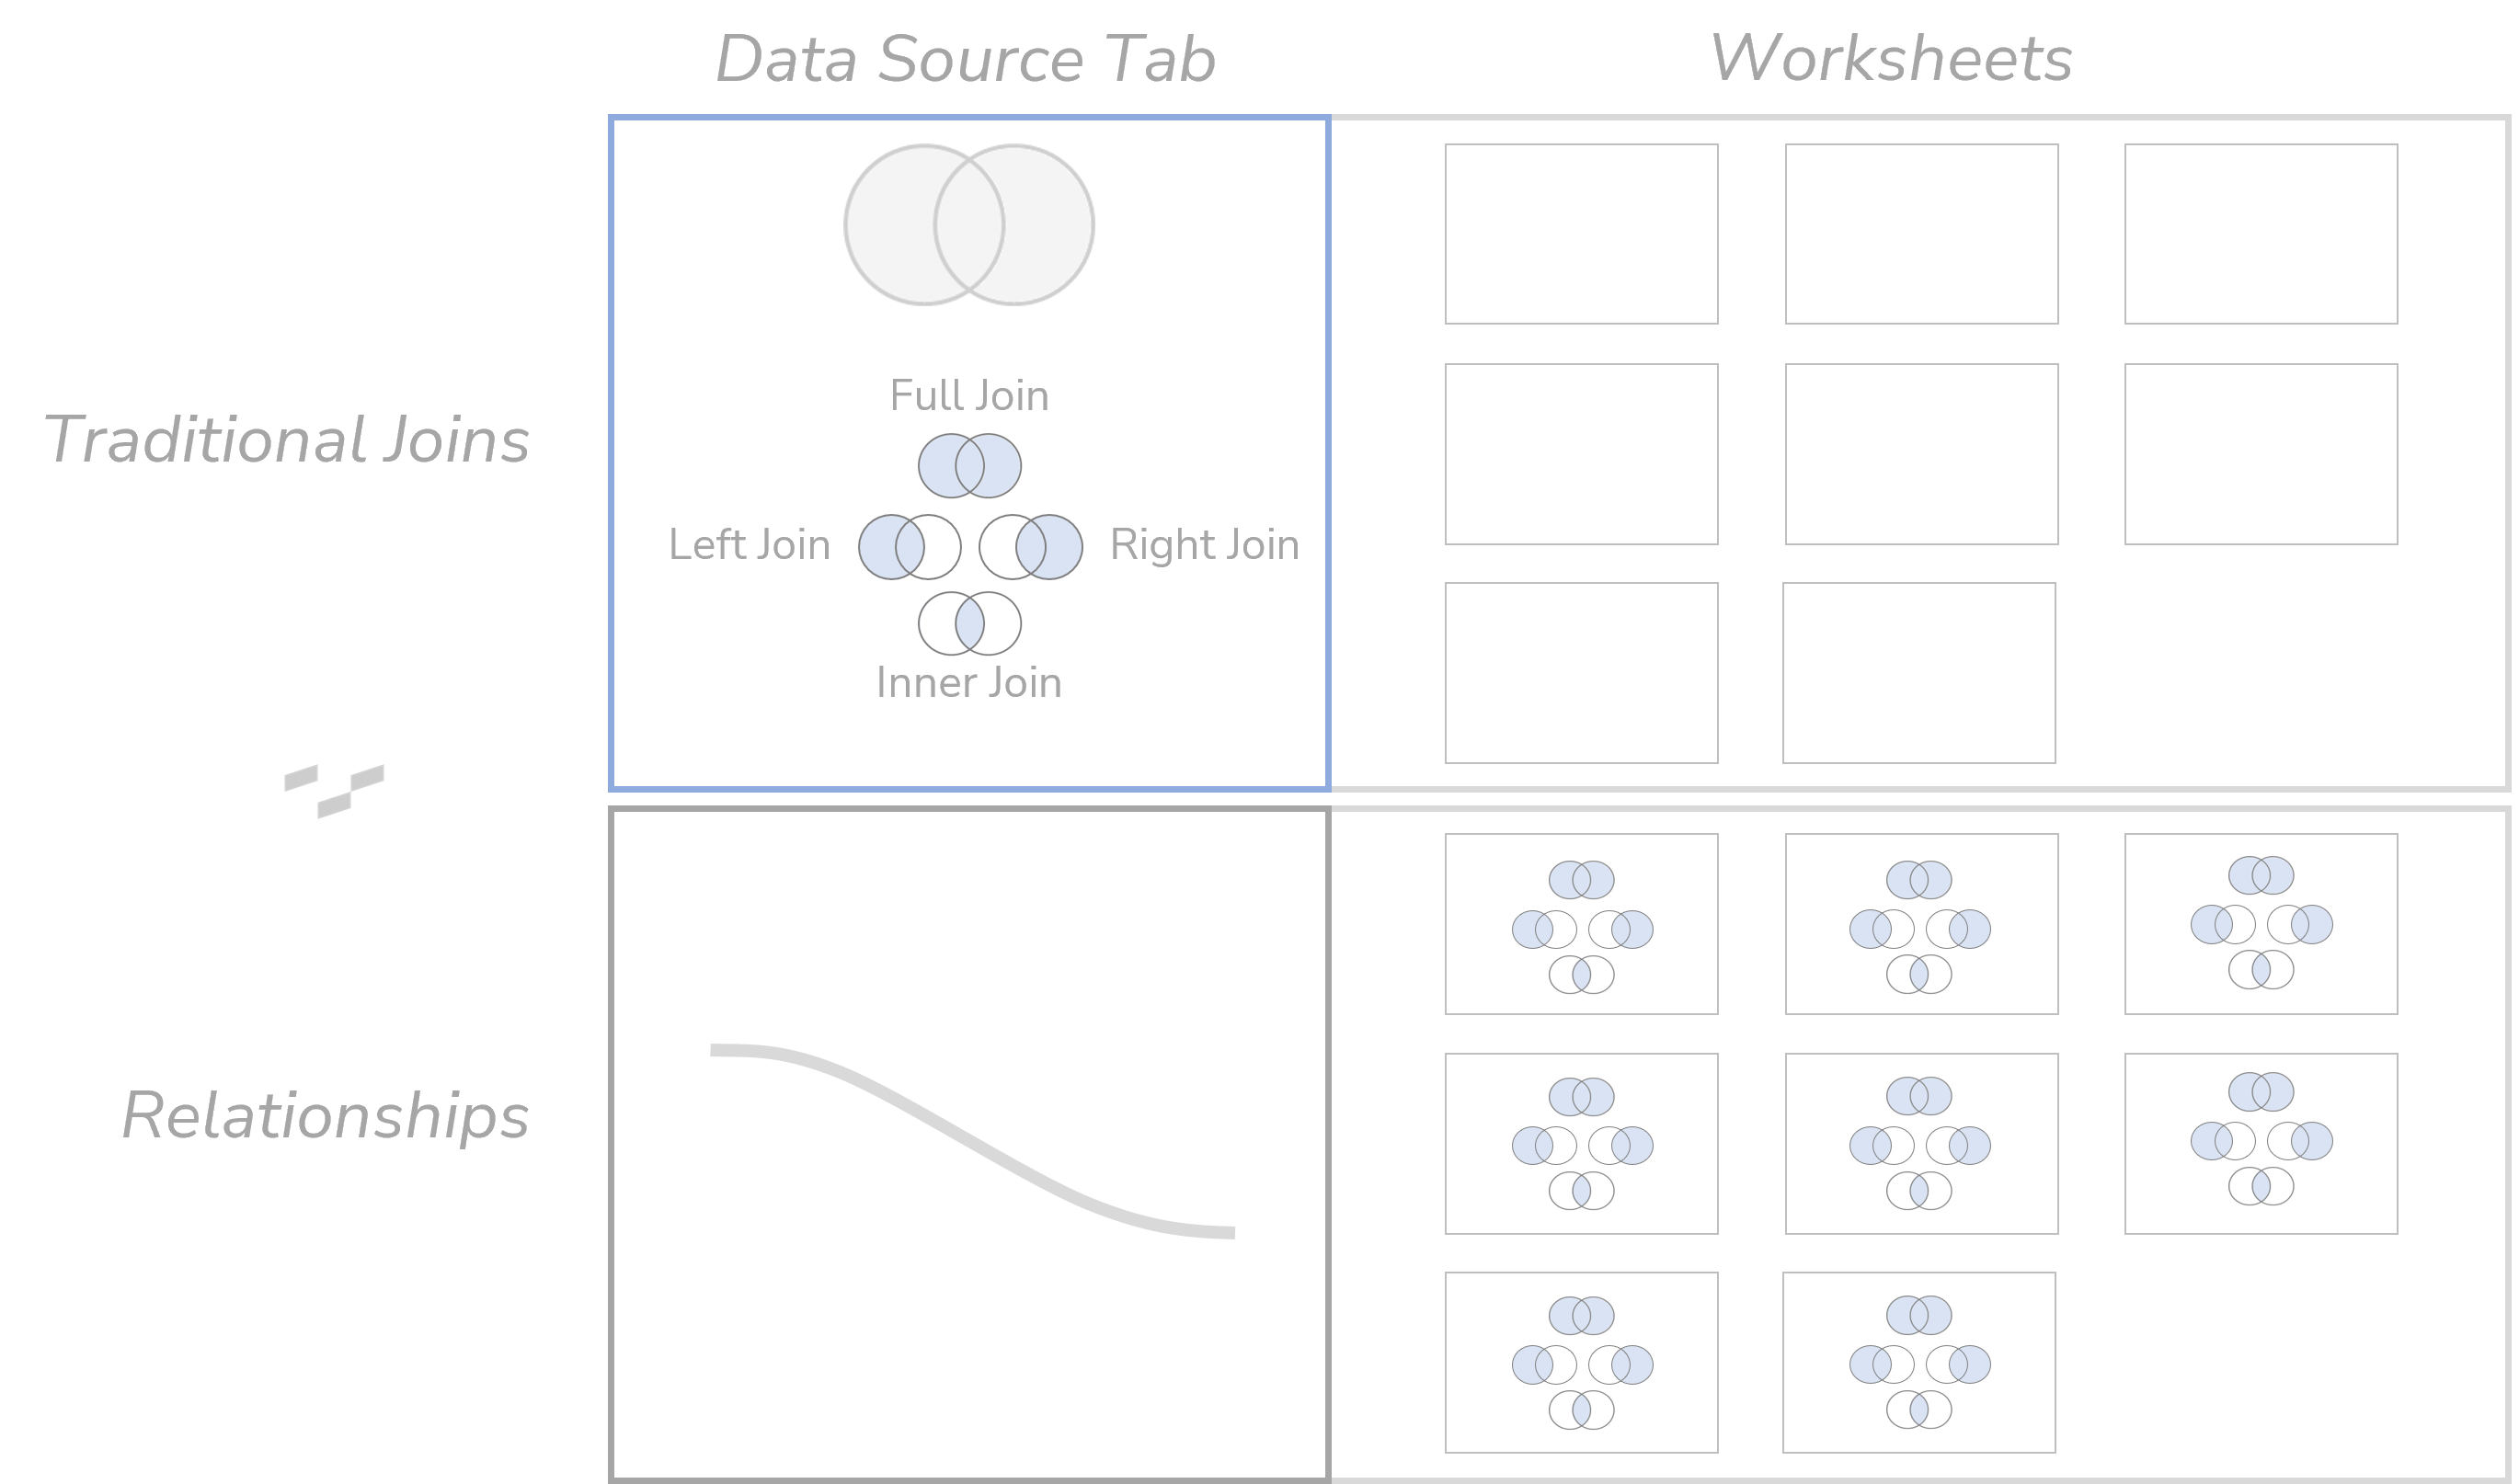 Tableau's Data Source Tab